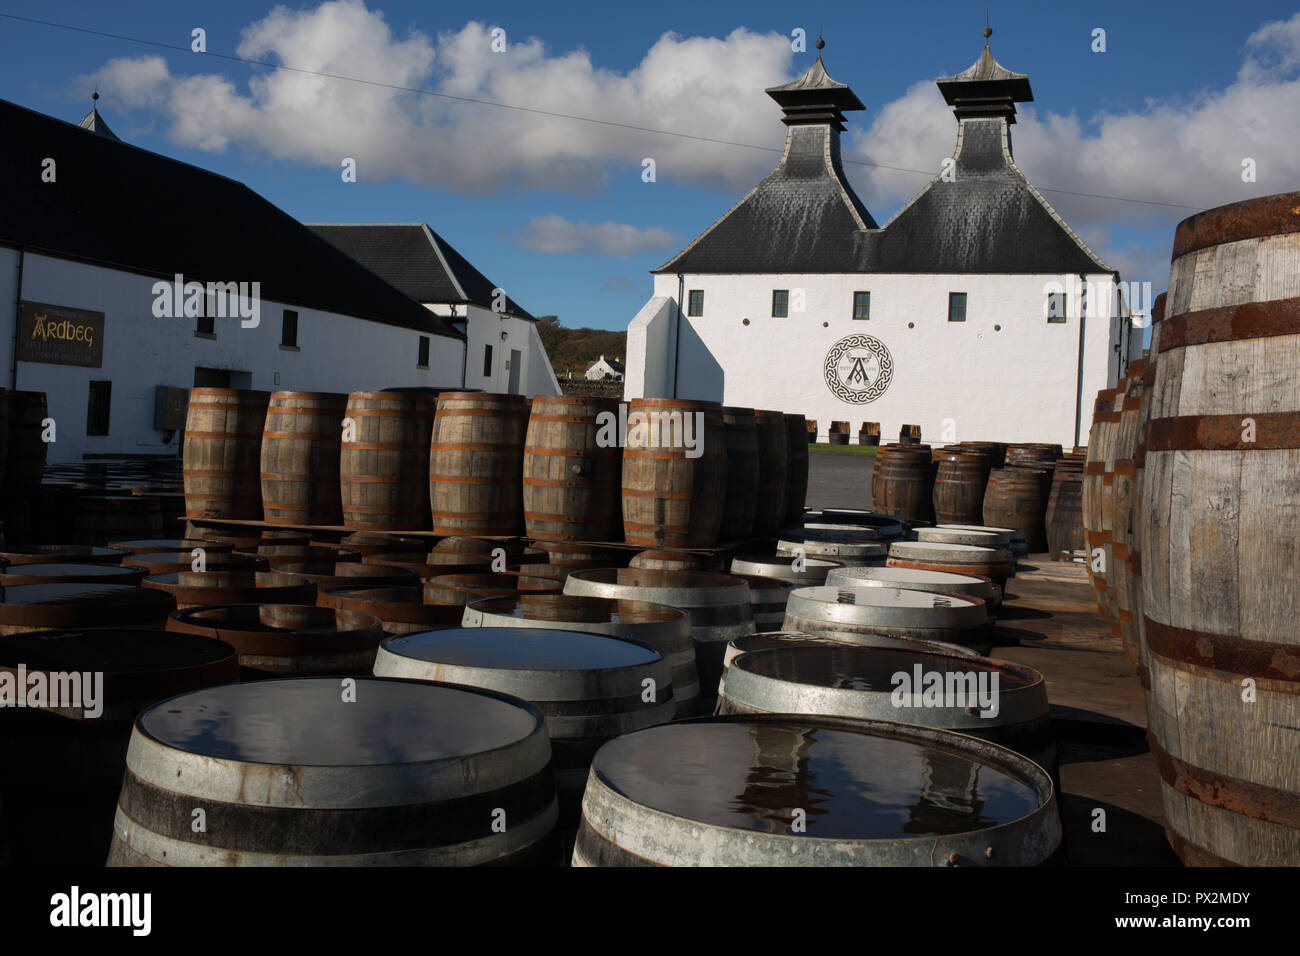 Ardbeg single malt whisky distillery, Islay, Scotland, Regno Unito. Foto Stock